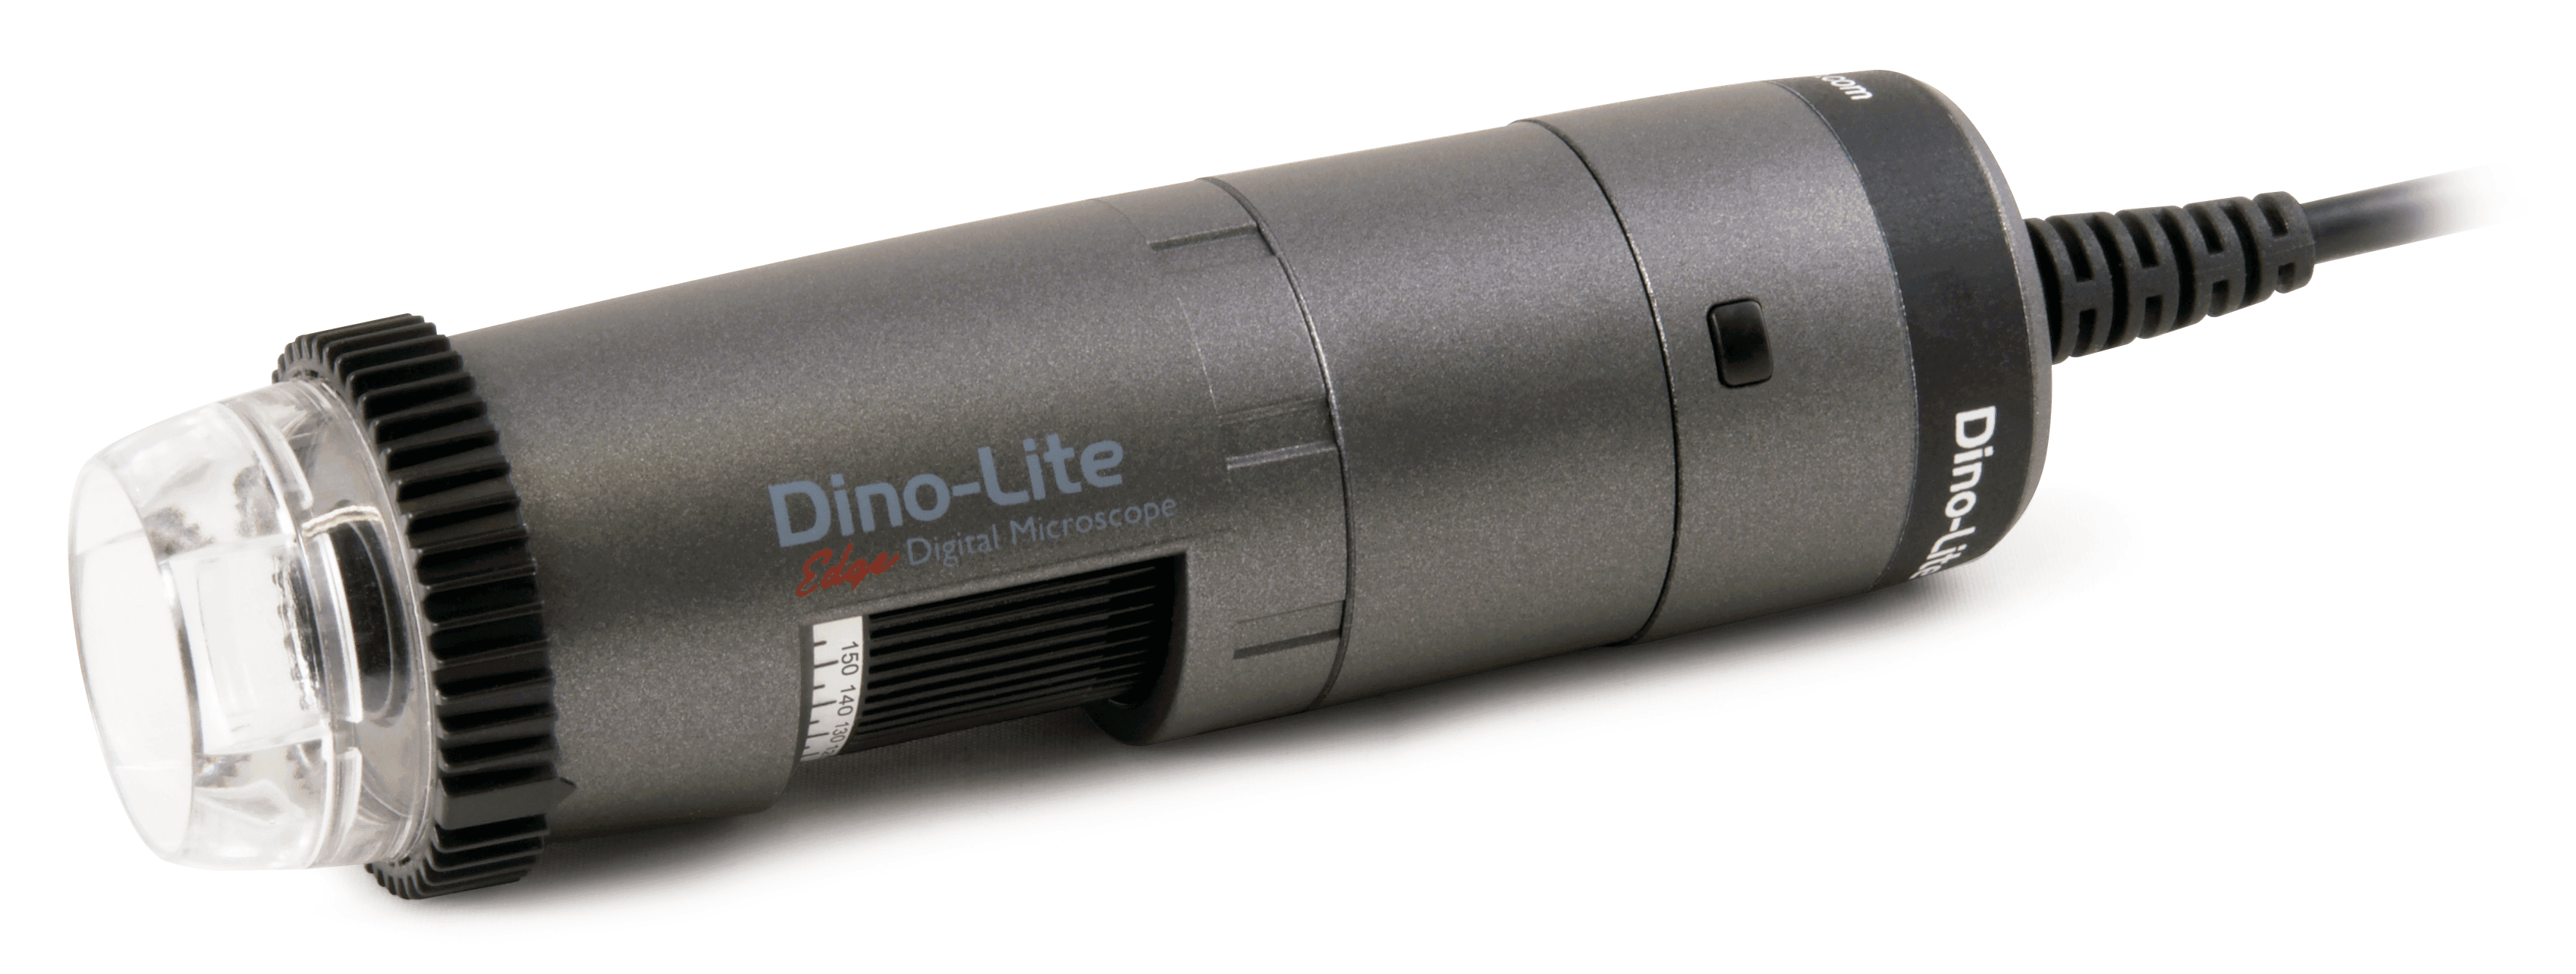 Dino-Lite AF4515ZT Edge digital microscope USB - Universal1.3MP, 20~220x, polarizer, FLC/AMR